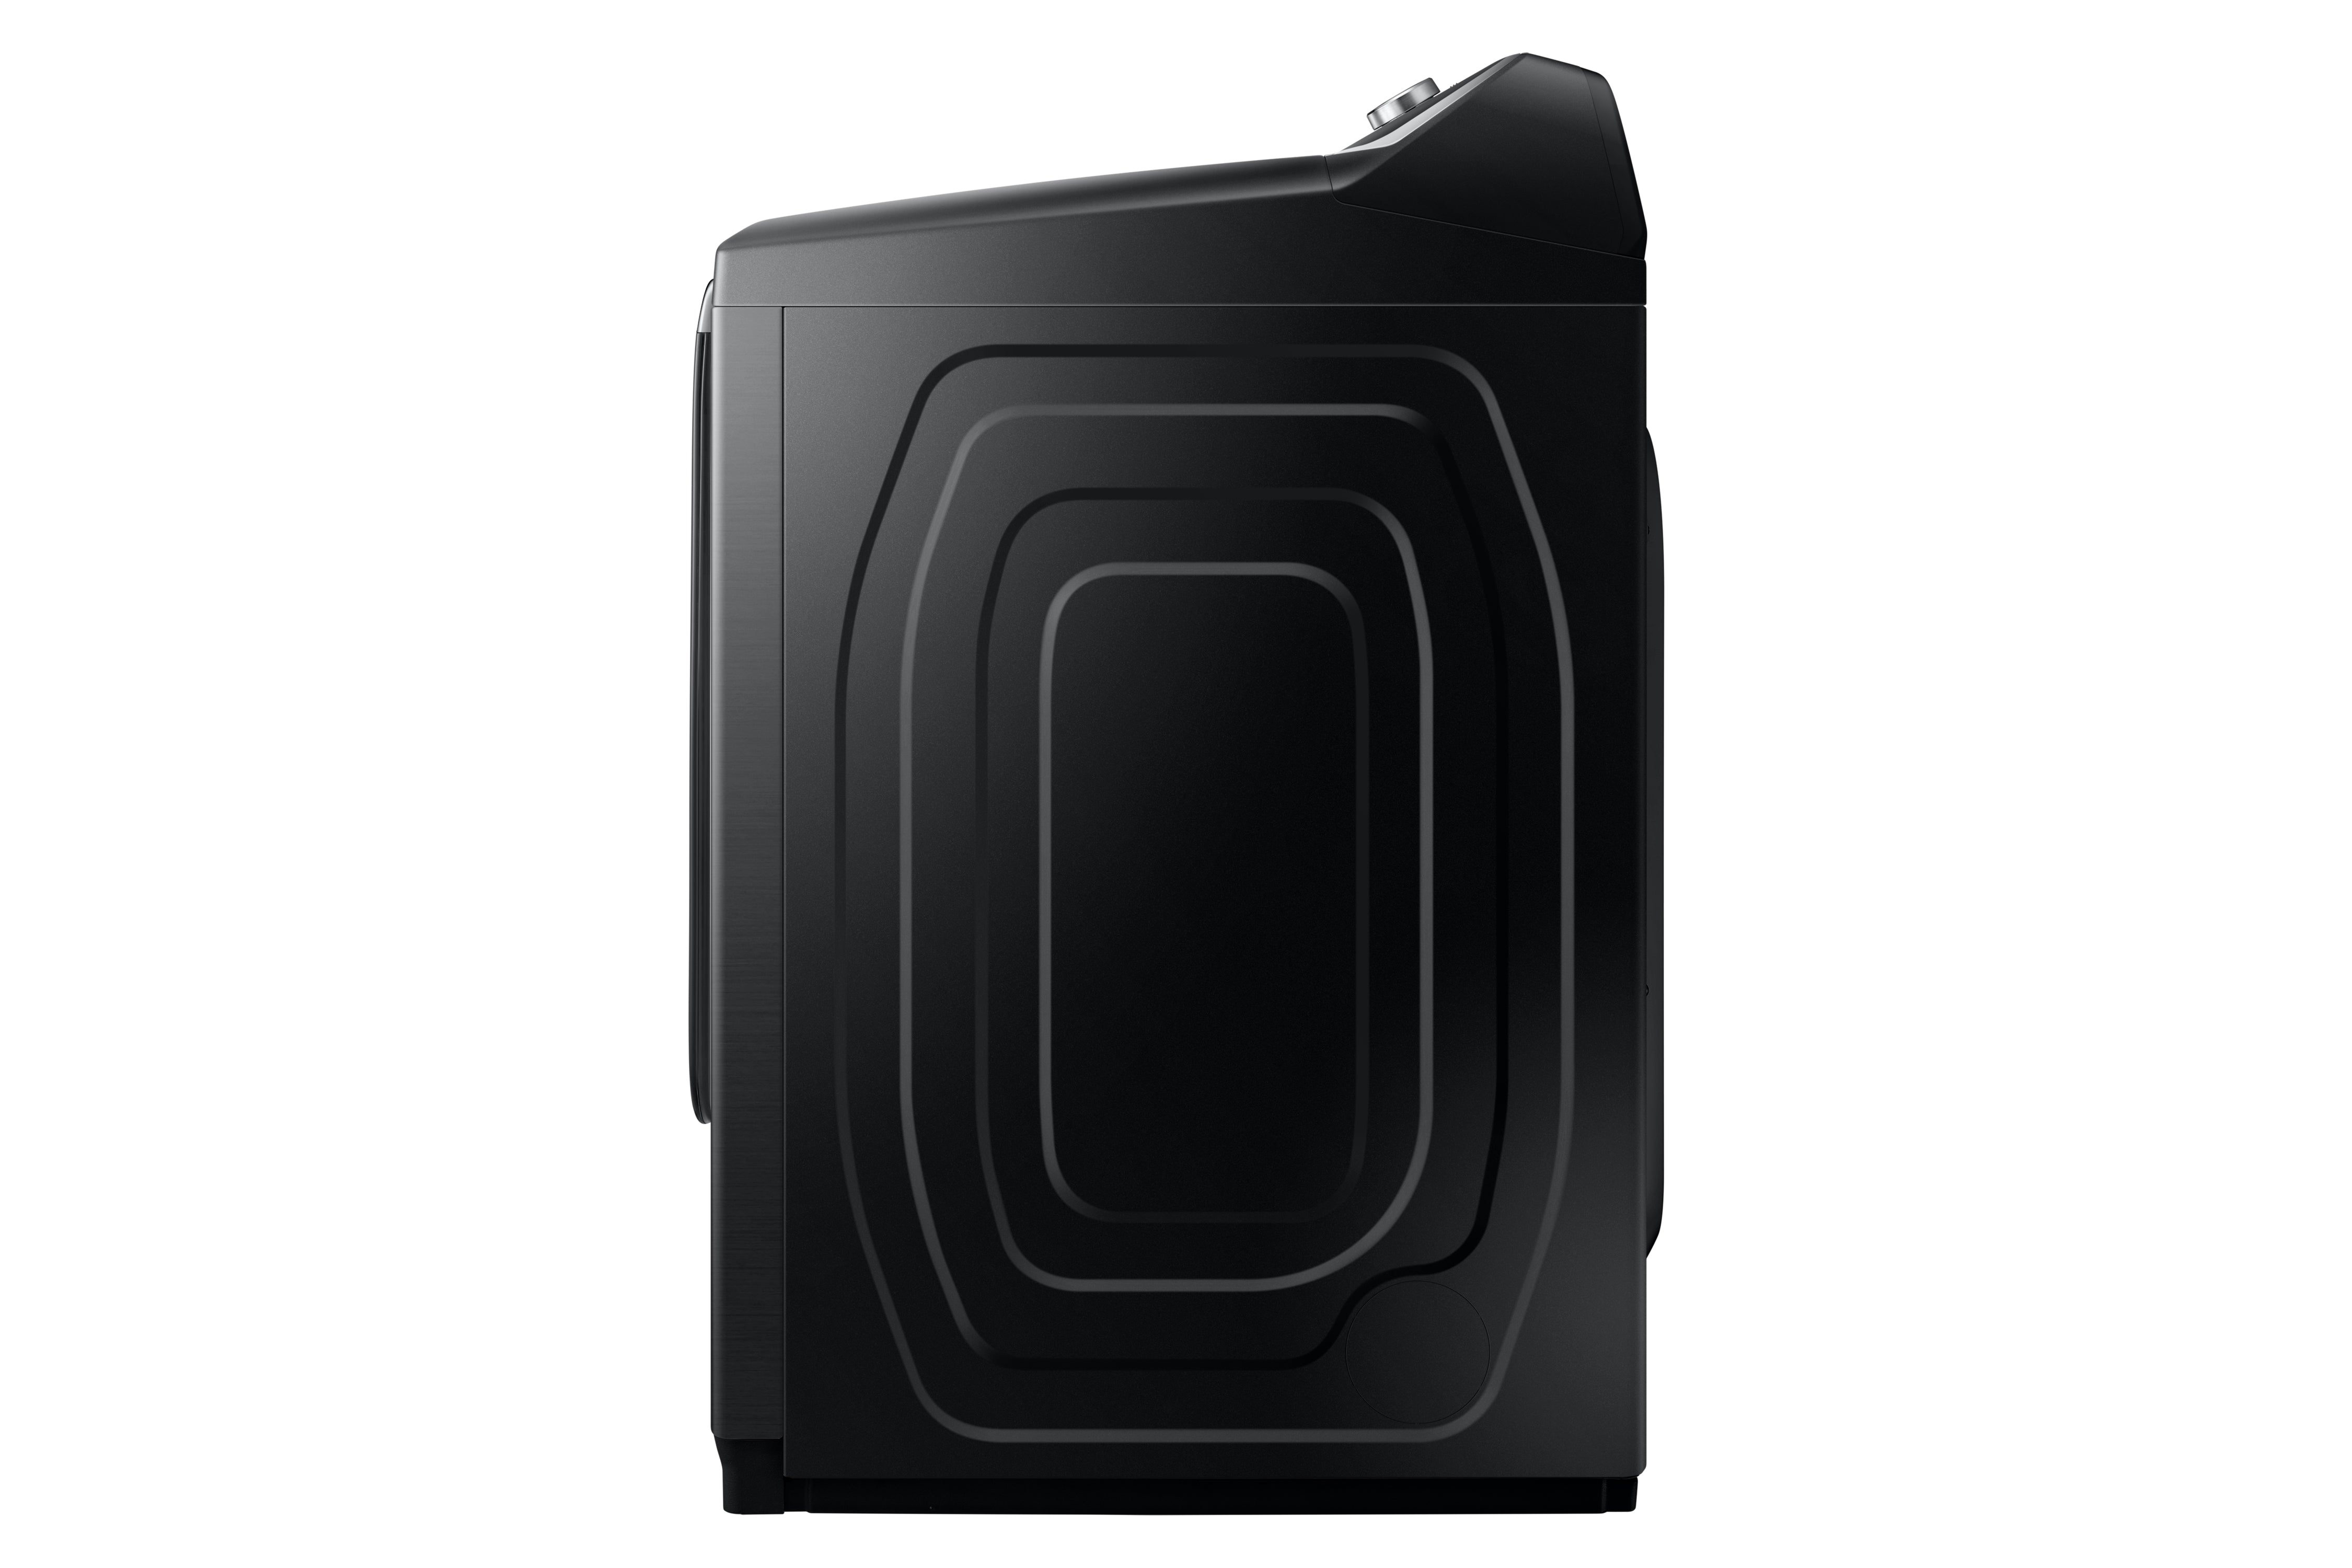 Samsung - 7.4 cu. Ft  Electric Dryer in Black Stainless - DVE52B7650V